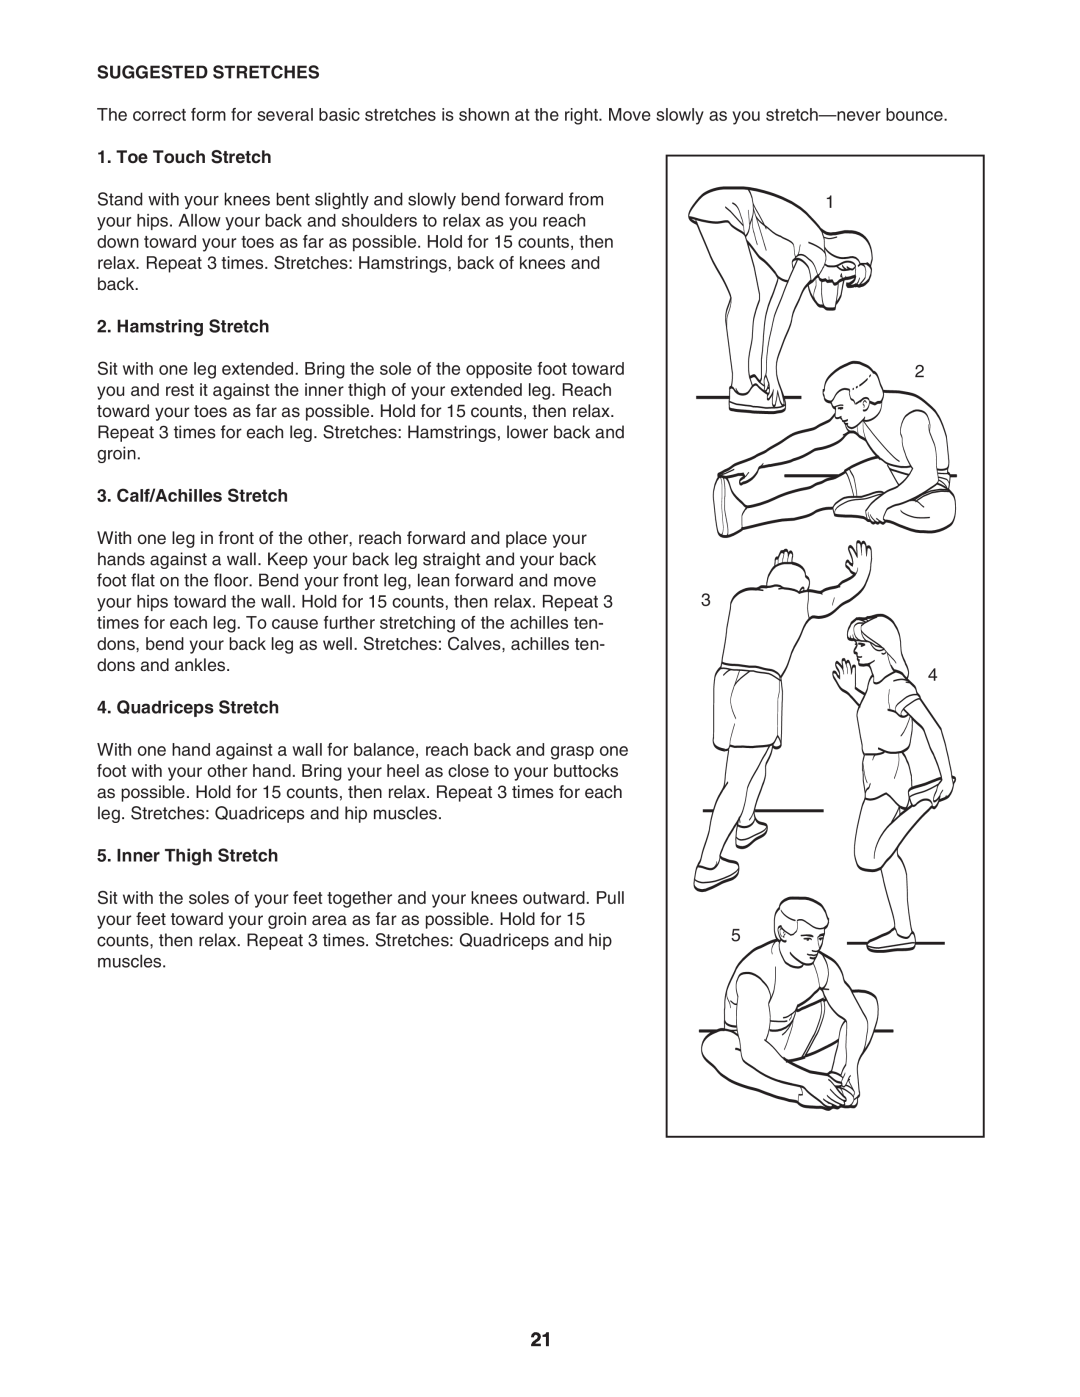 ProForm PMTL32706.0 Suggested Stretches, Toe Touch Stretch, Hamstring Stretch, Calf/Achilles Stretch, Quadriceps Stretch 